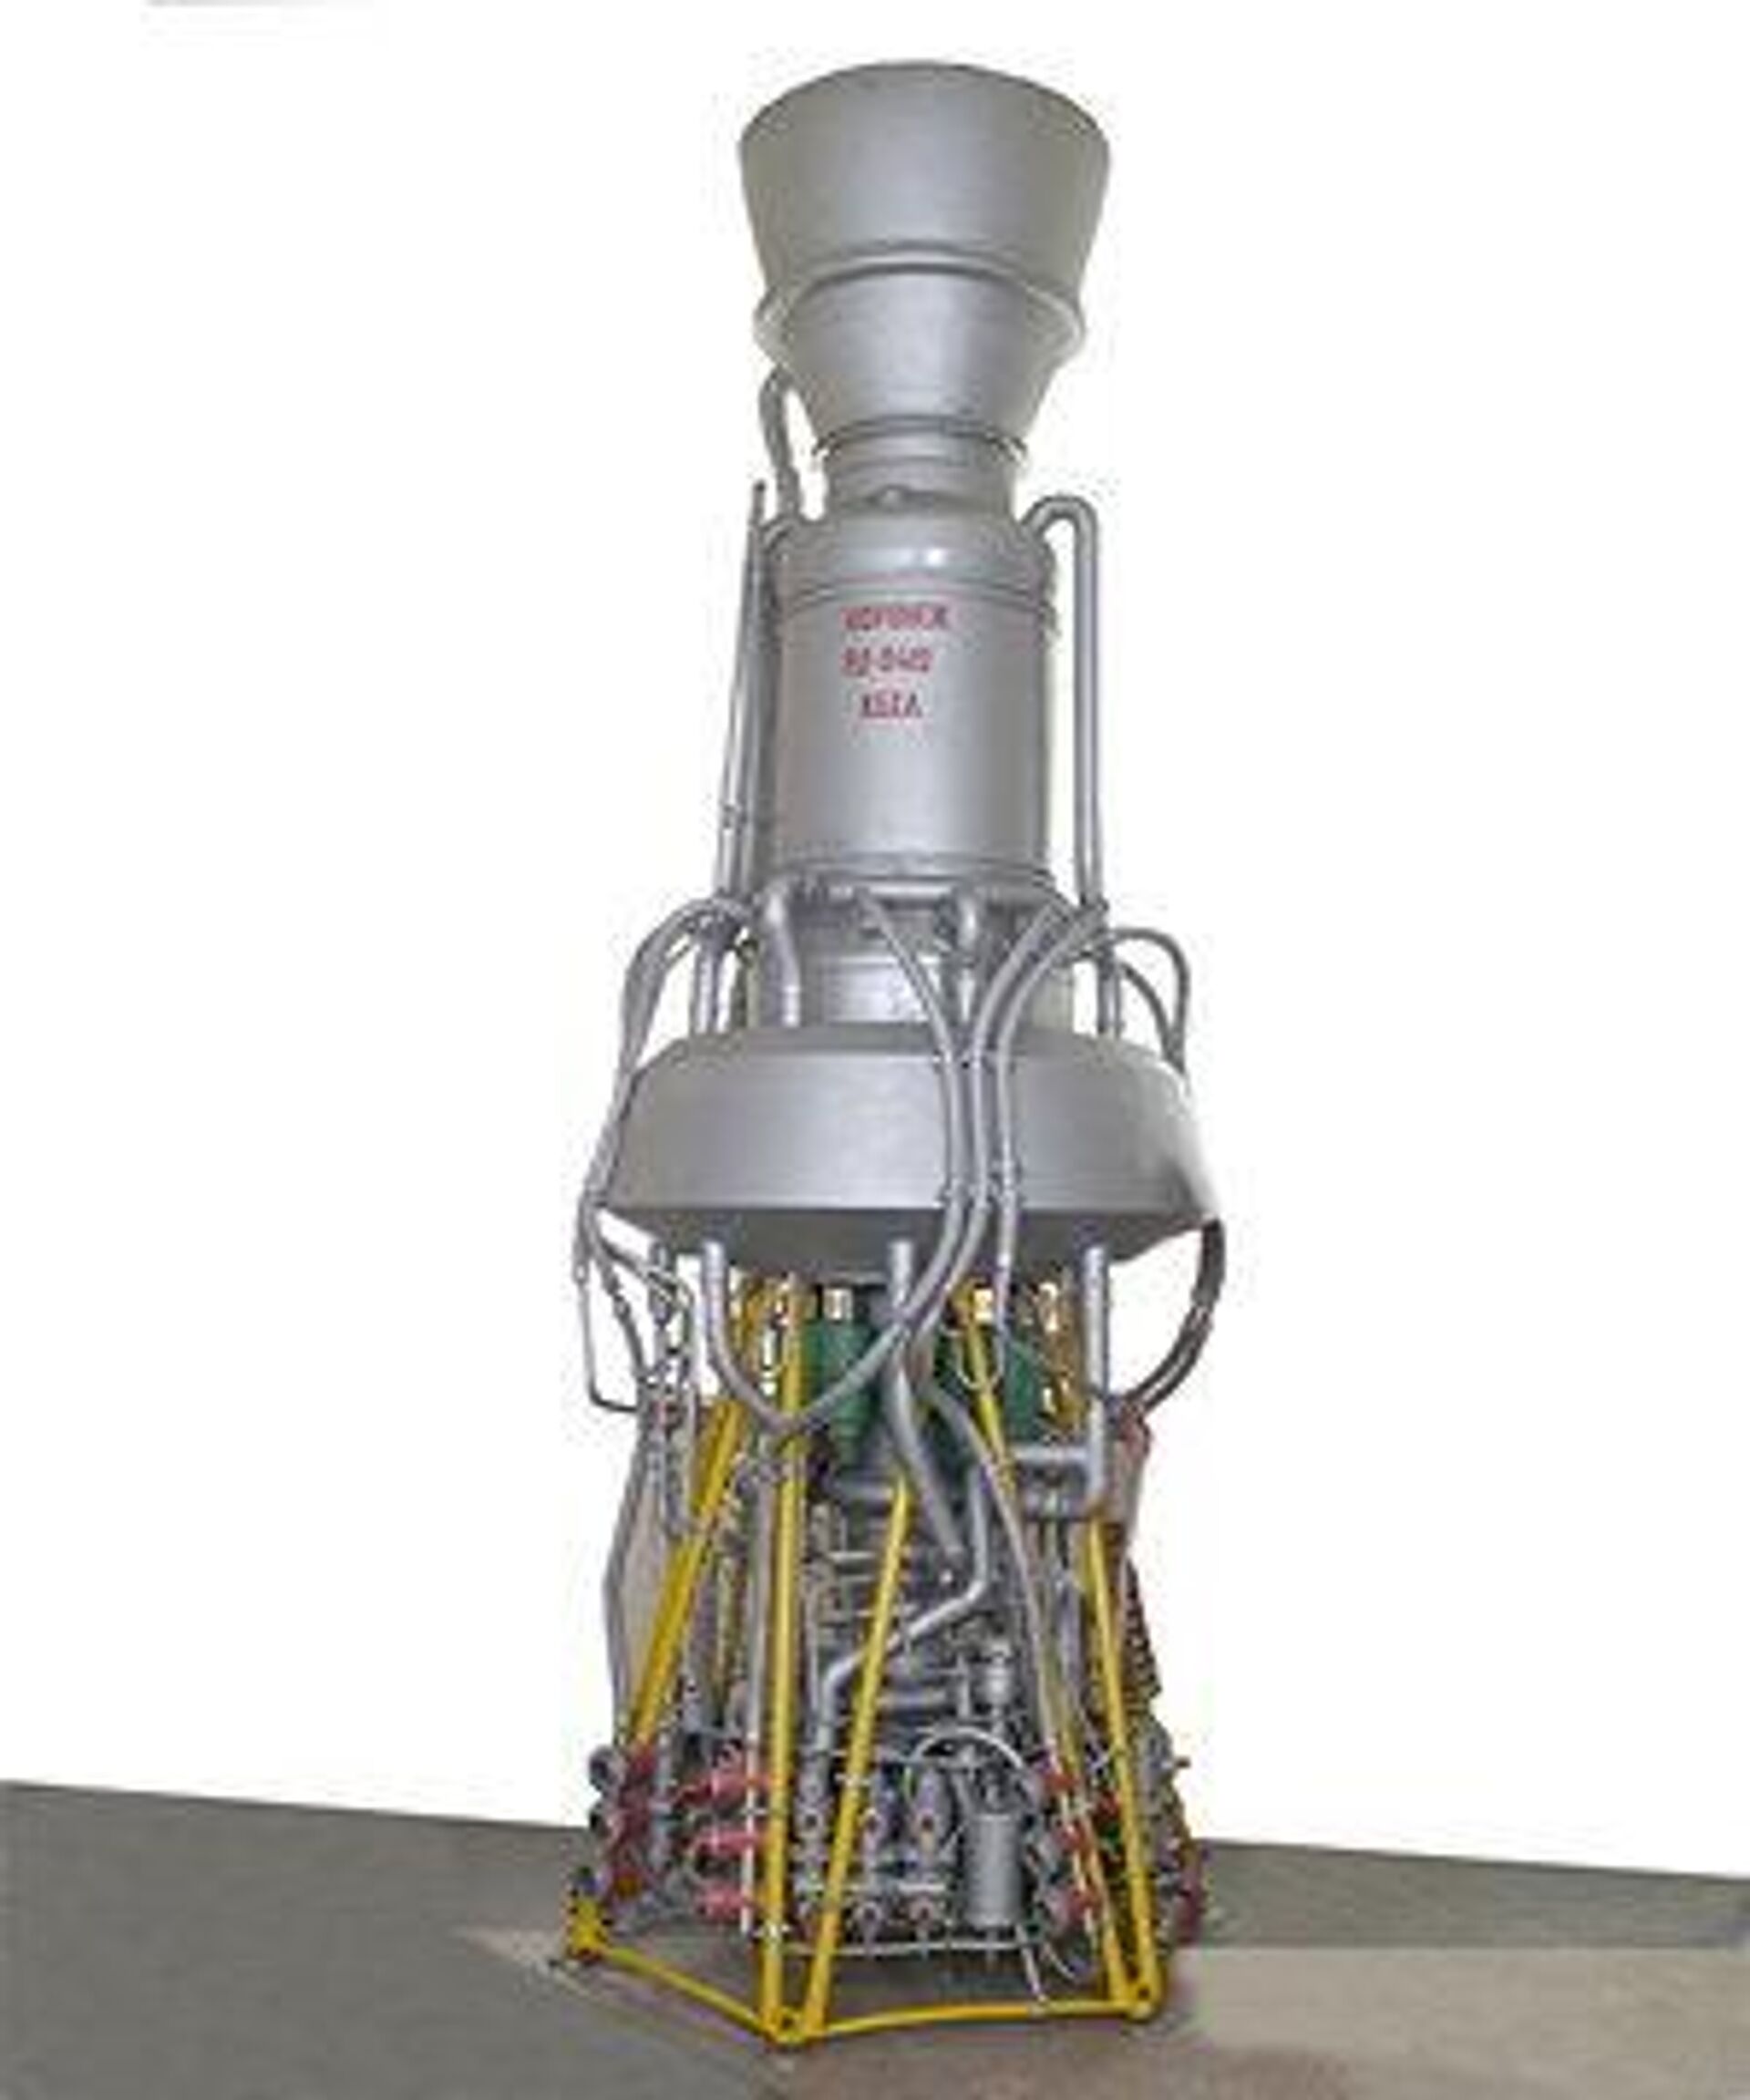 RD-0410 nuclear-powered rocket engine. - Sputnik International, 1920, 06.10.2023